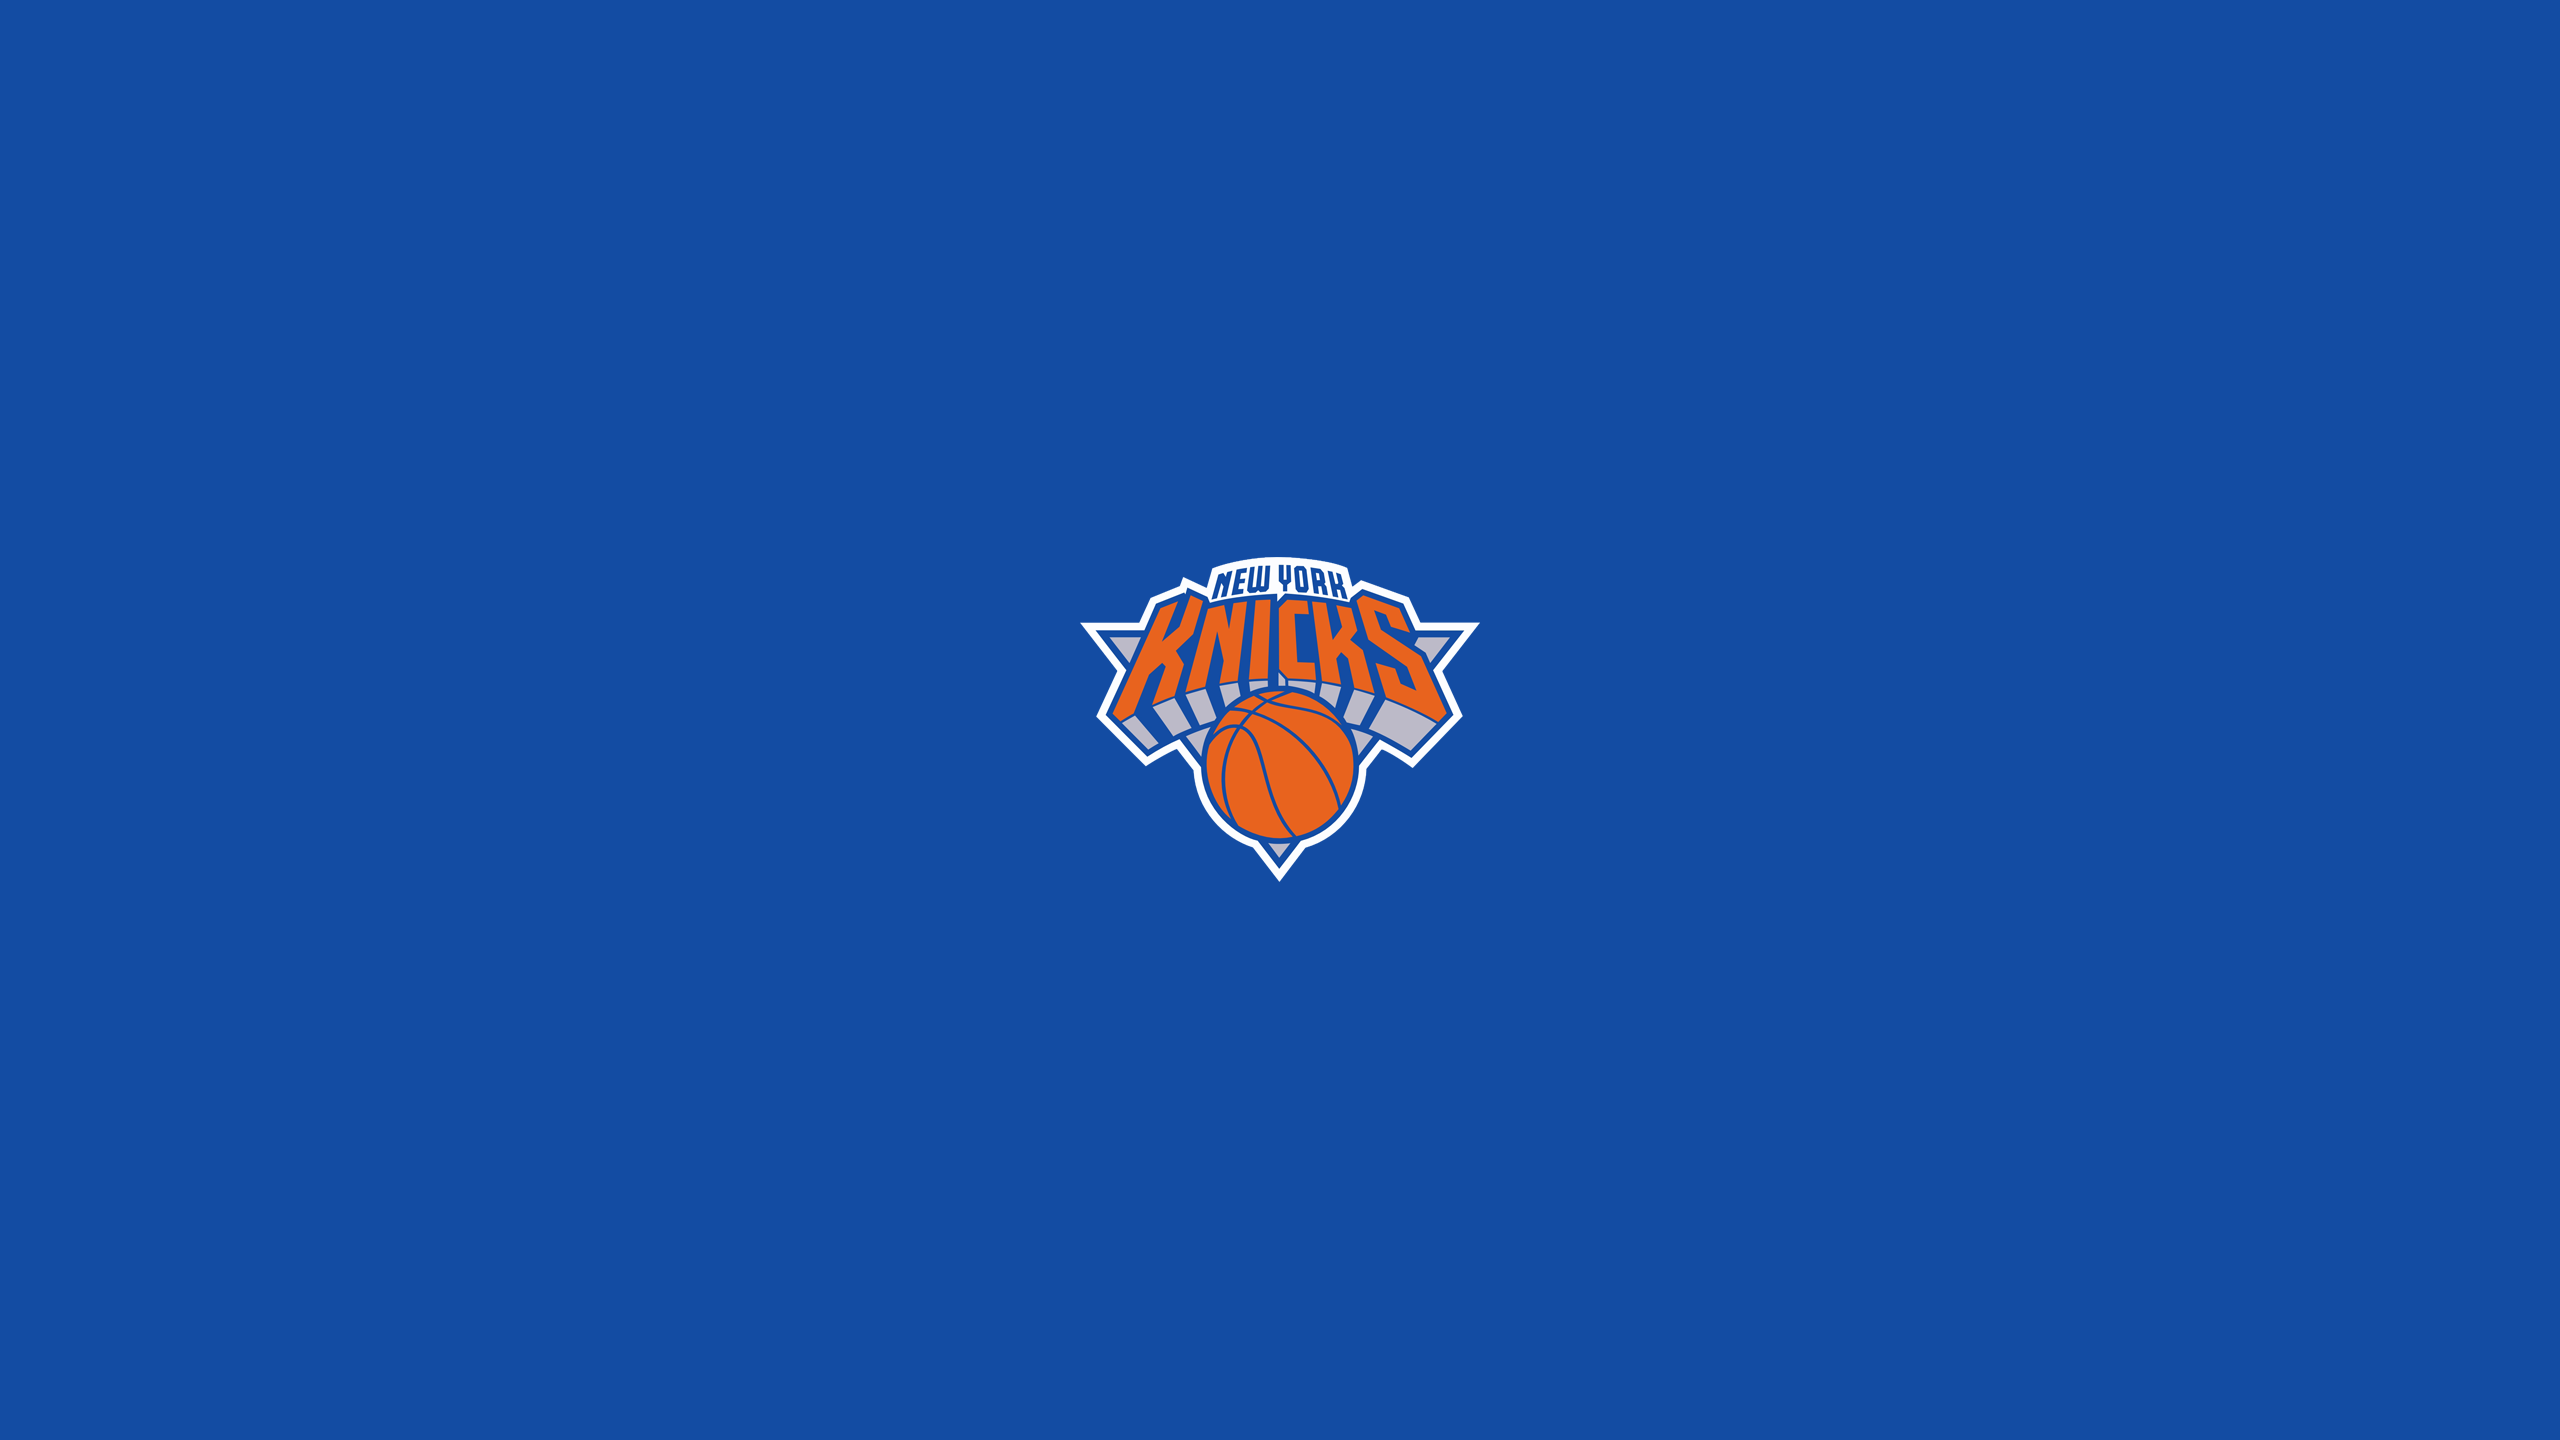 New York Knicks - Square Bettor